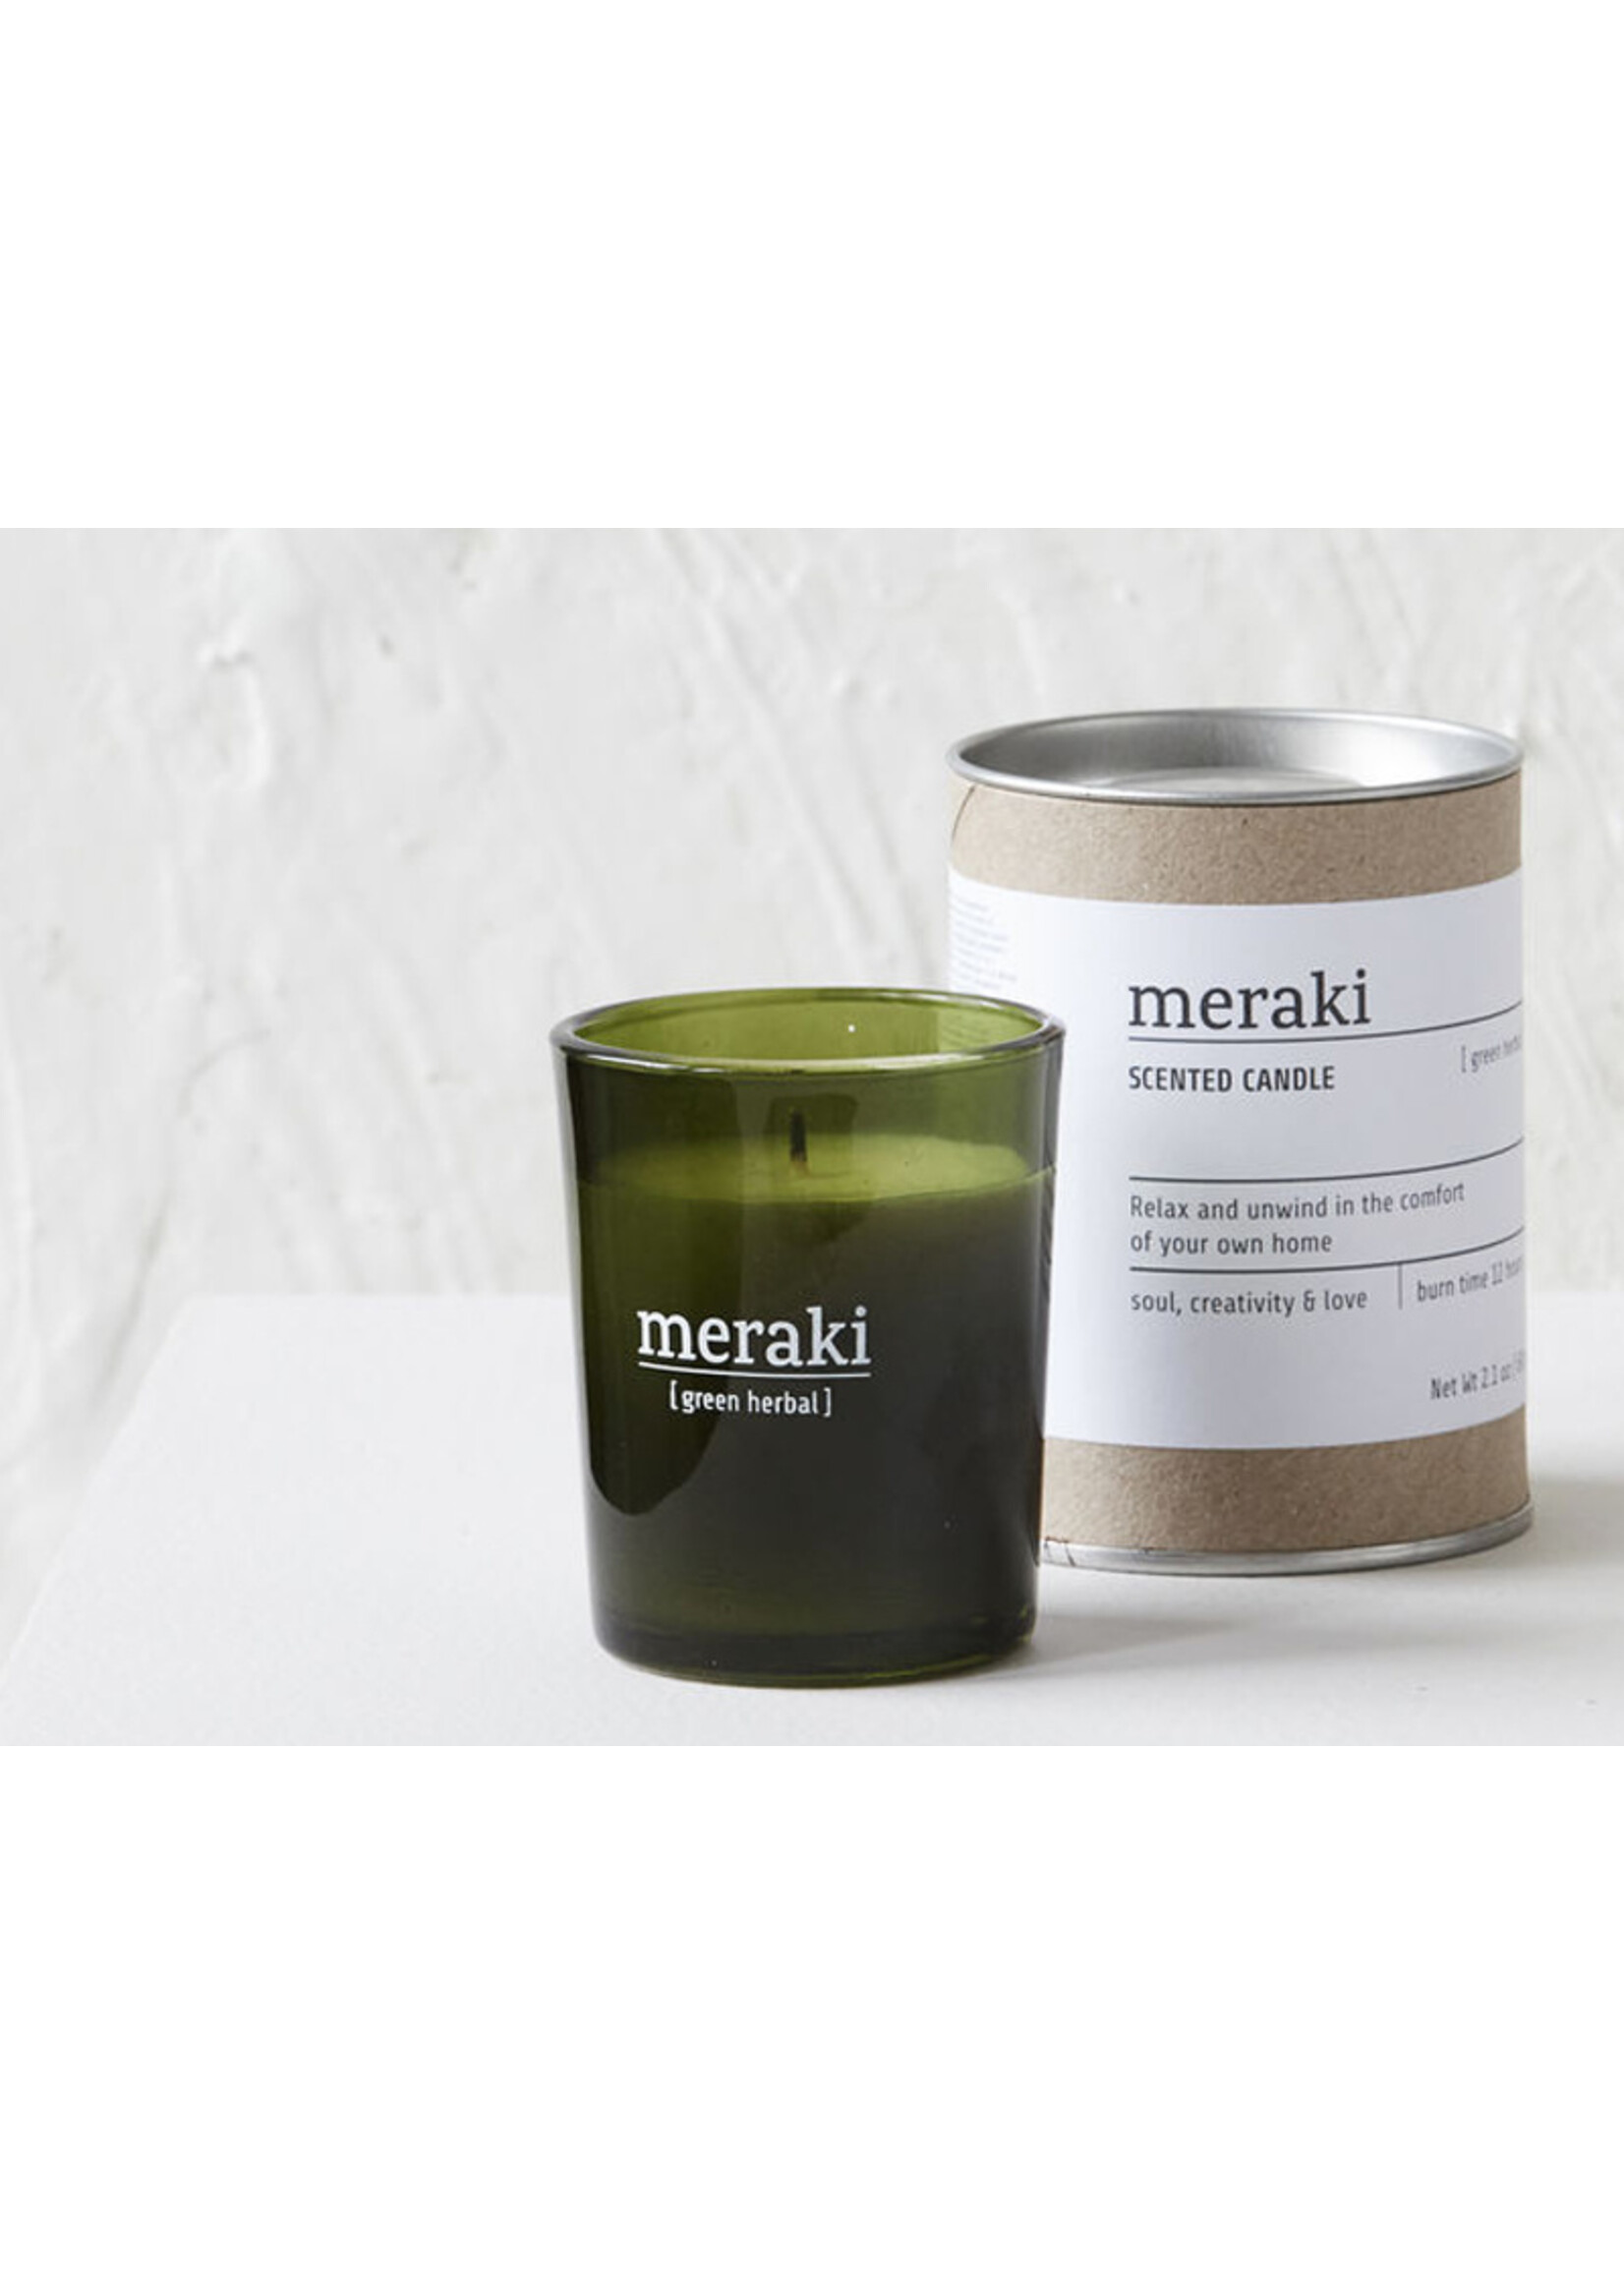 Meraki Scented Candle - Green Herbal